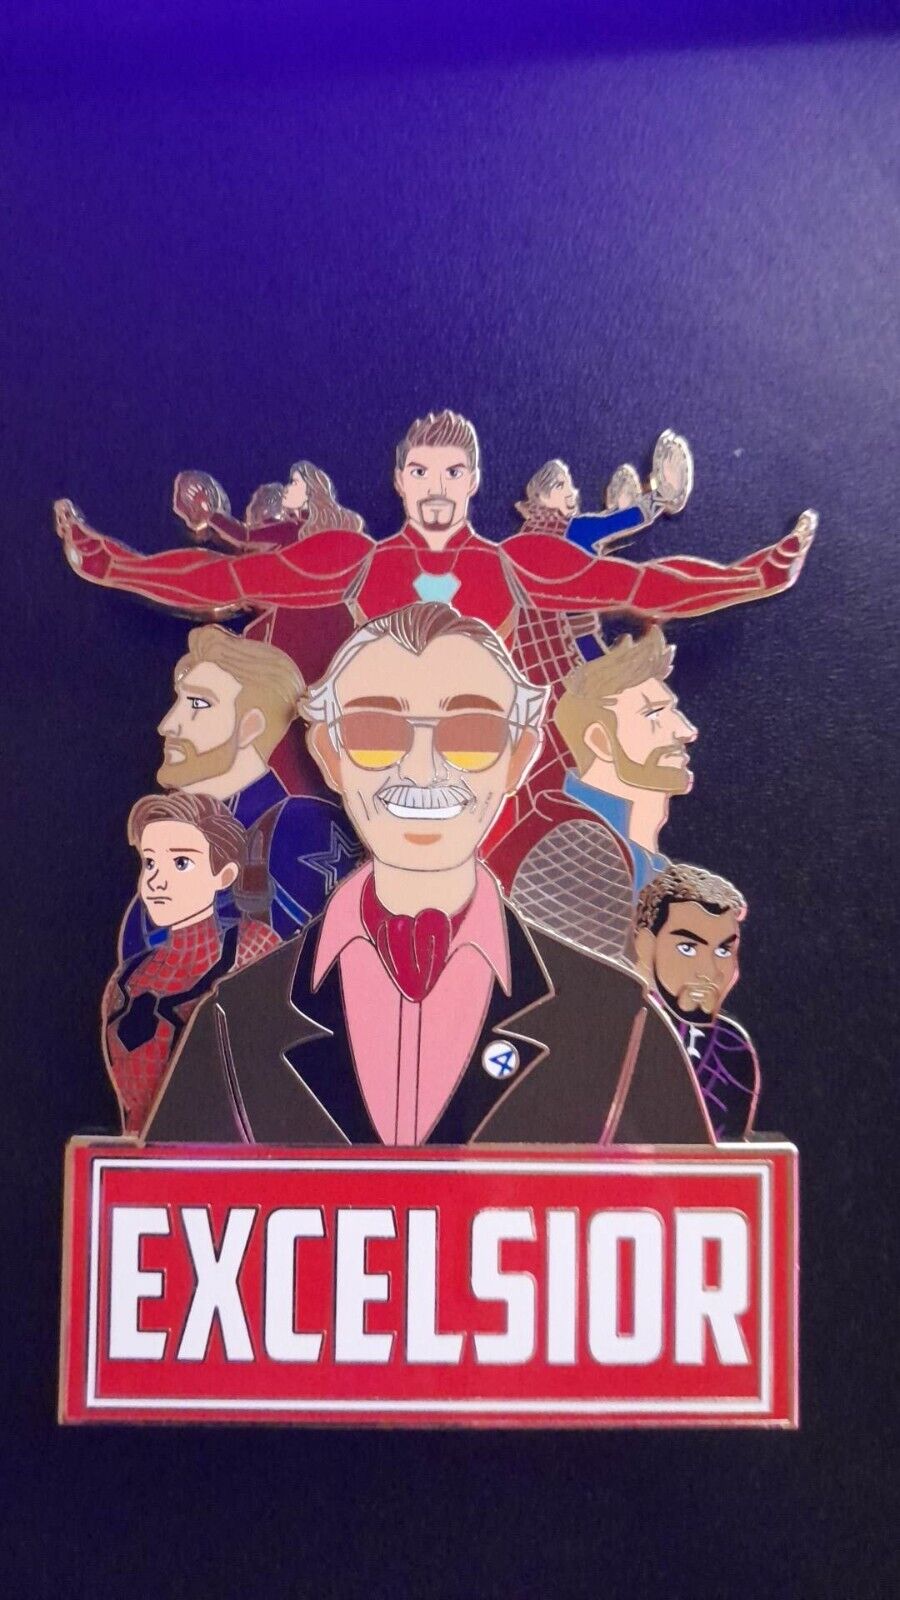 Final Price - Stan Lee Large Excelsior Fantasy Pin